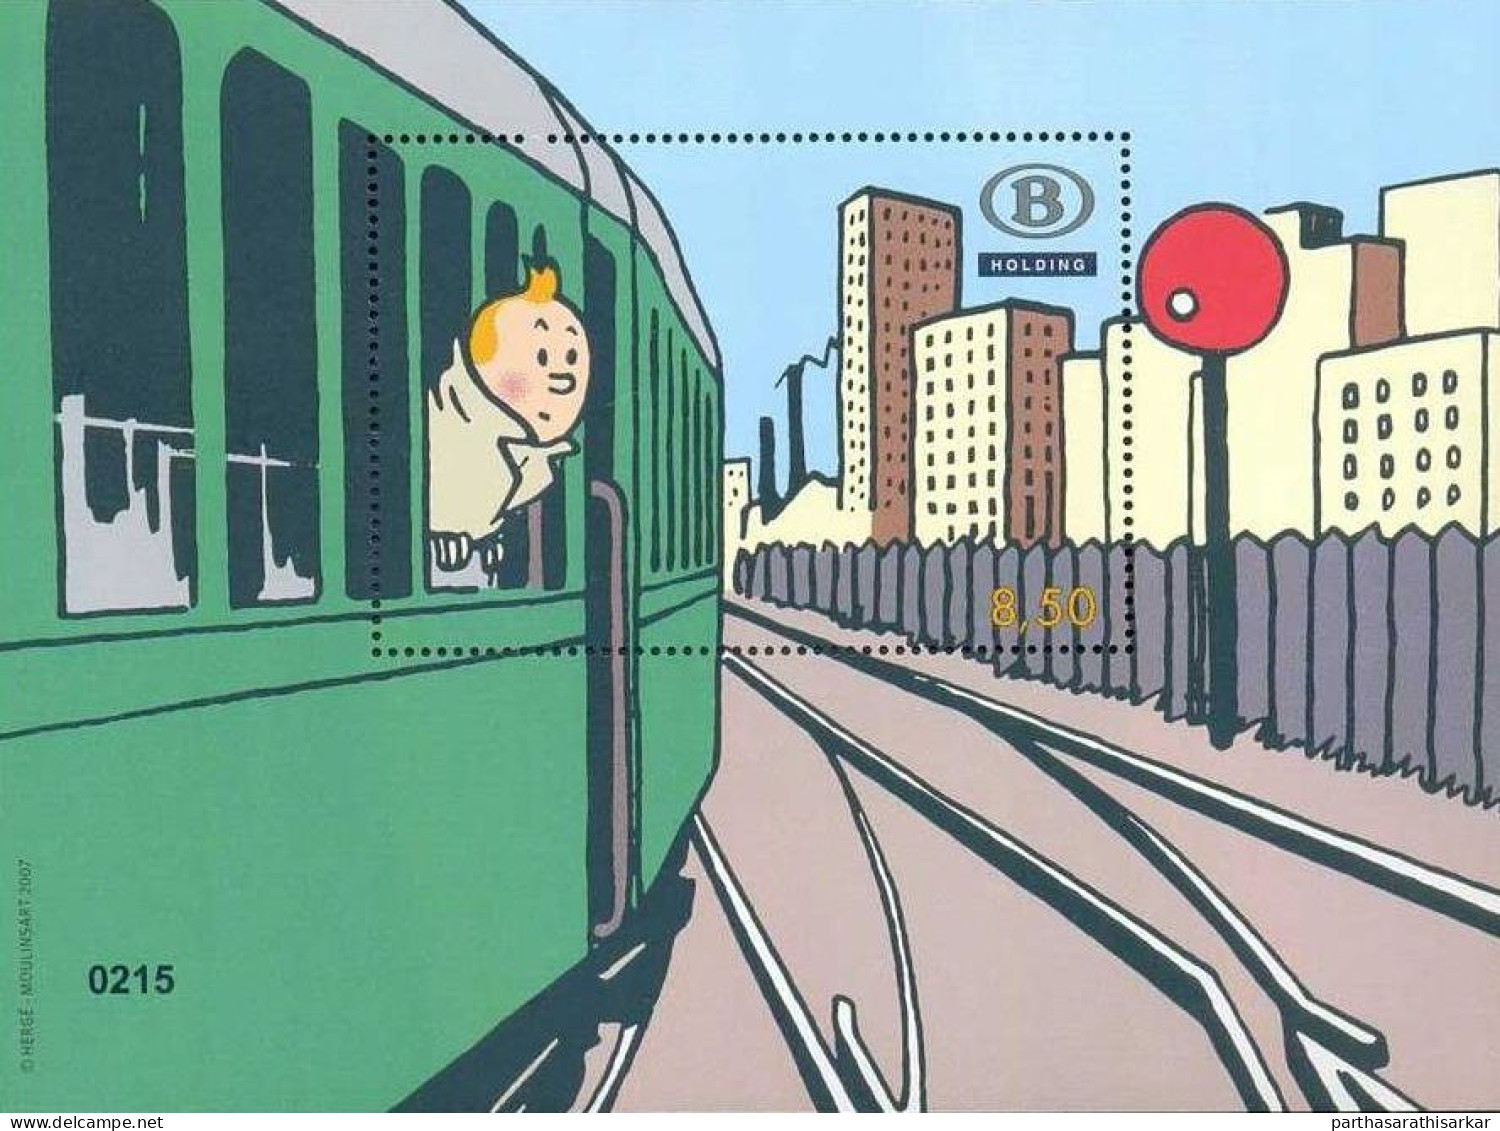 BELGIUM 2007 ADVENTURES OF TINTIN RAILWAYS VERY LIMITED KNOWN NUMBERED MINIATURE SHEET MS MNH - Comics